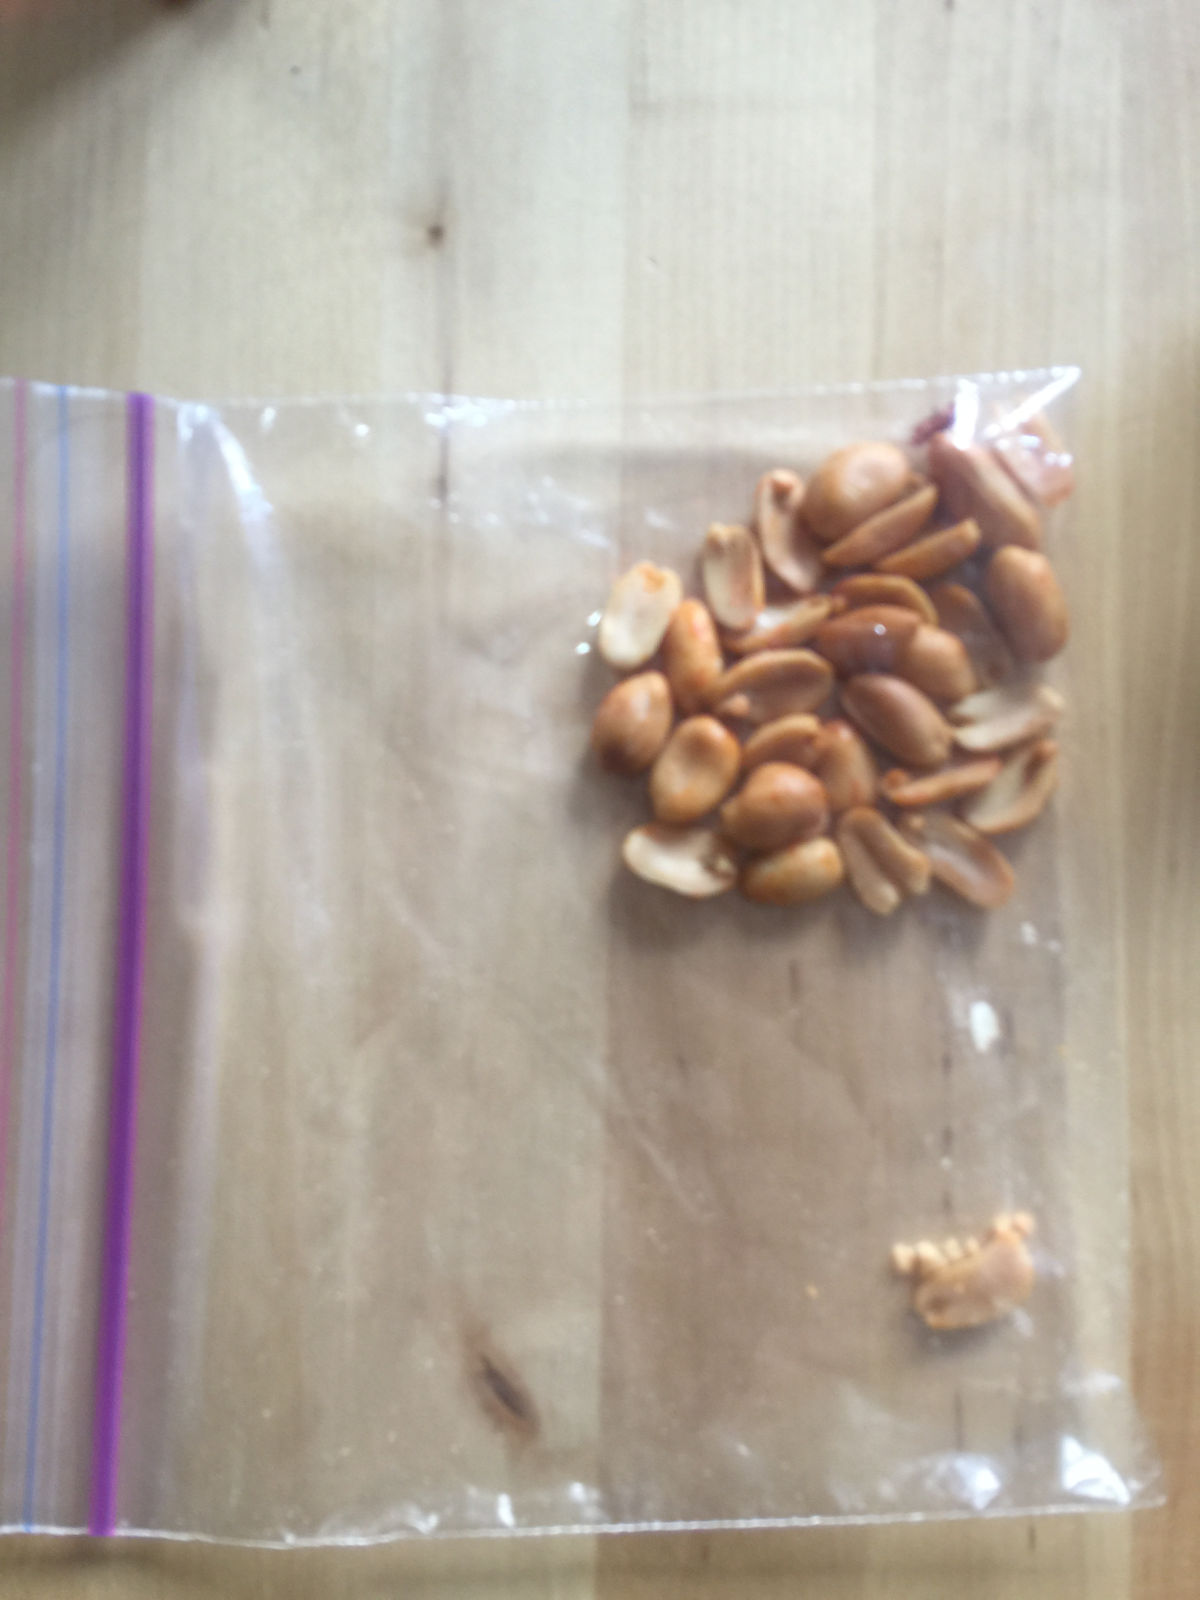 Overhead view of peanuts in a Ziploc bag.